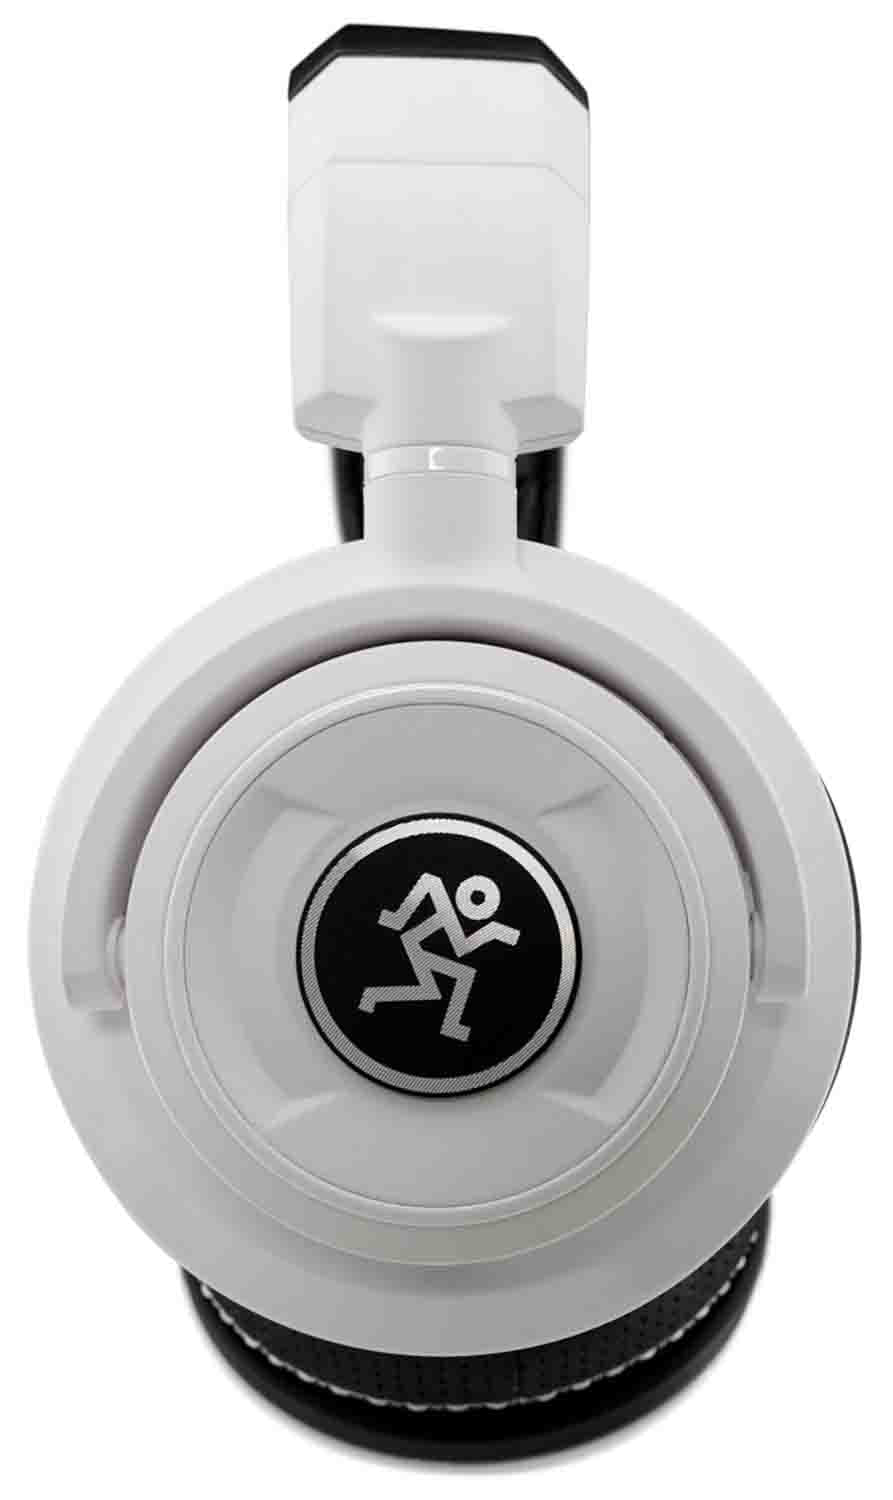 B-Stock:Mackie MC-350 Professional Closed-Back DJ Headphones - White by Mackie